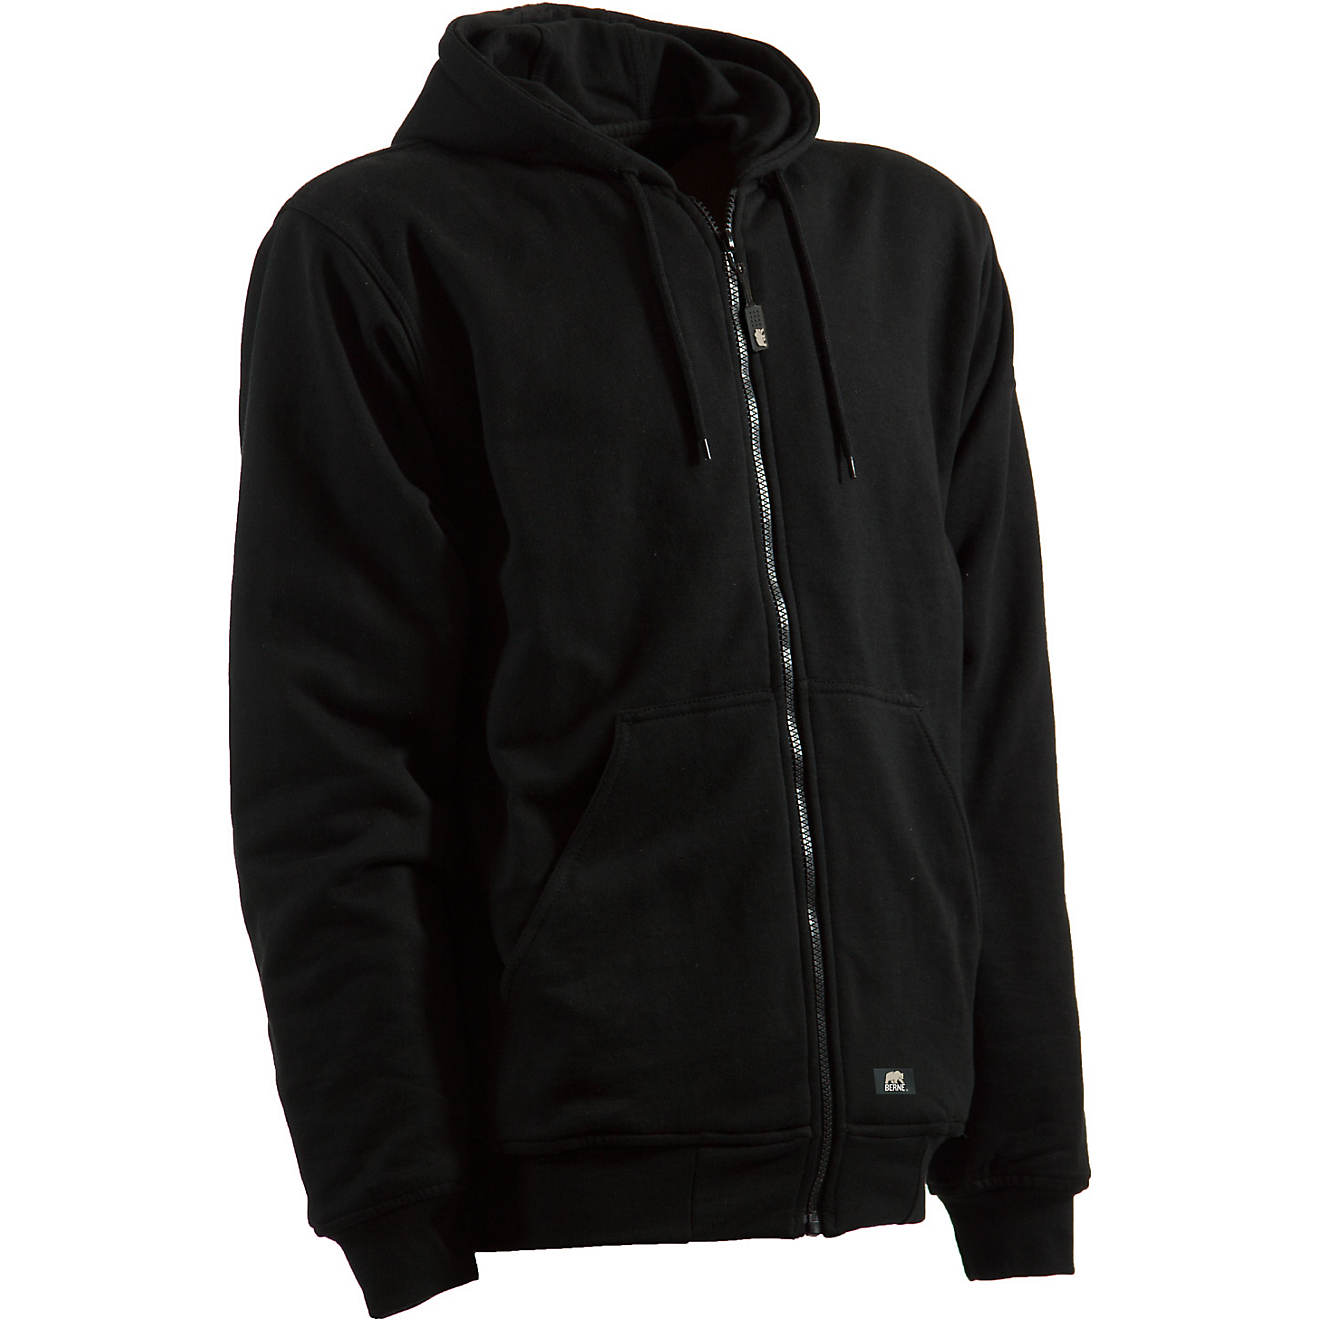 BERNE Men's Quarter Zip Hooded Sweatshirt Thermal Lined B&T Sizes A30565RM 